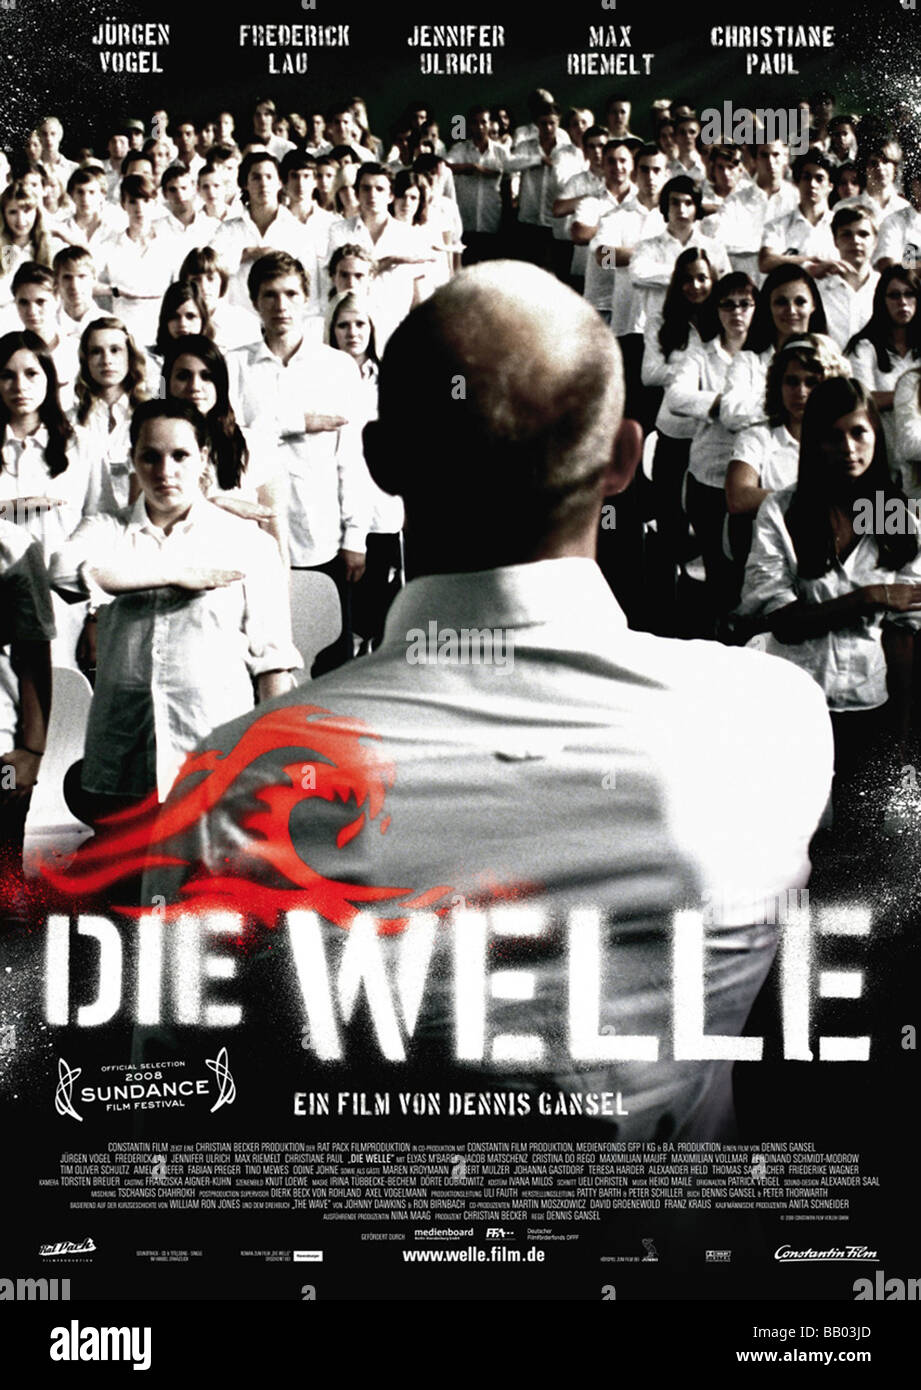 Die Welle Year : 2008 : Dennis Gansel, poster (Ger Stock Photo -